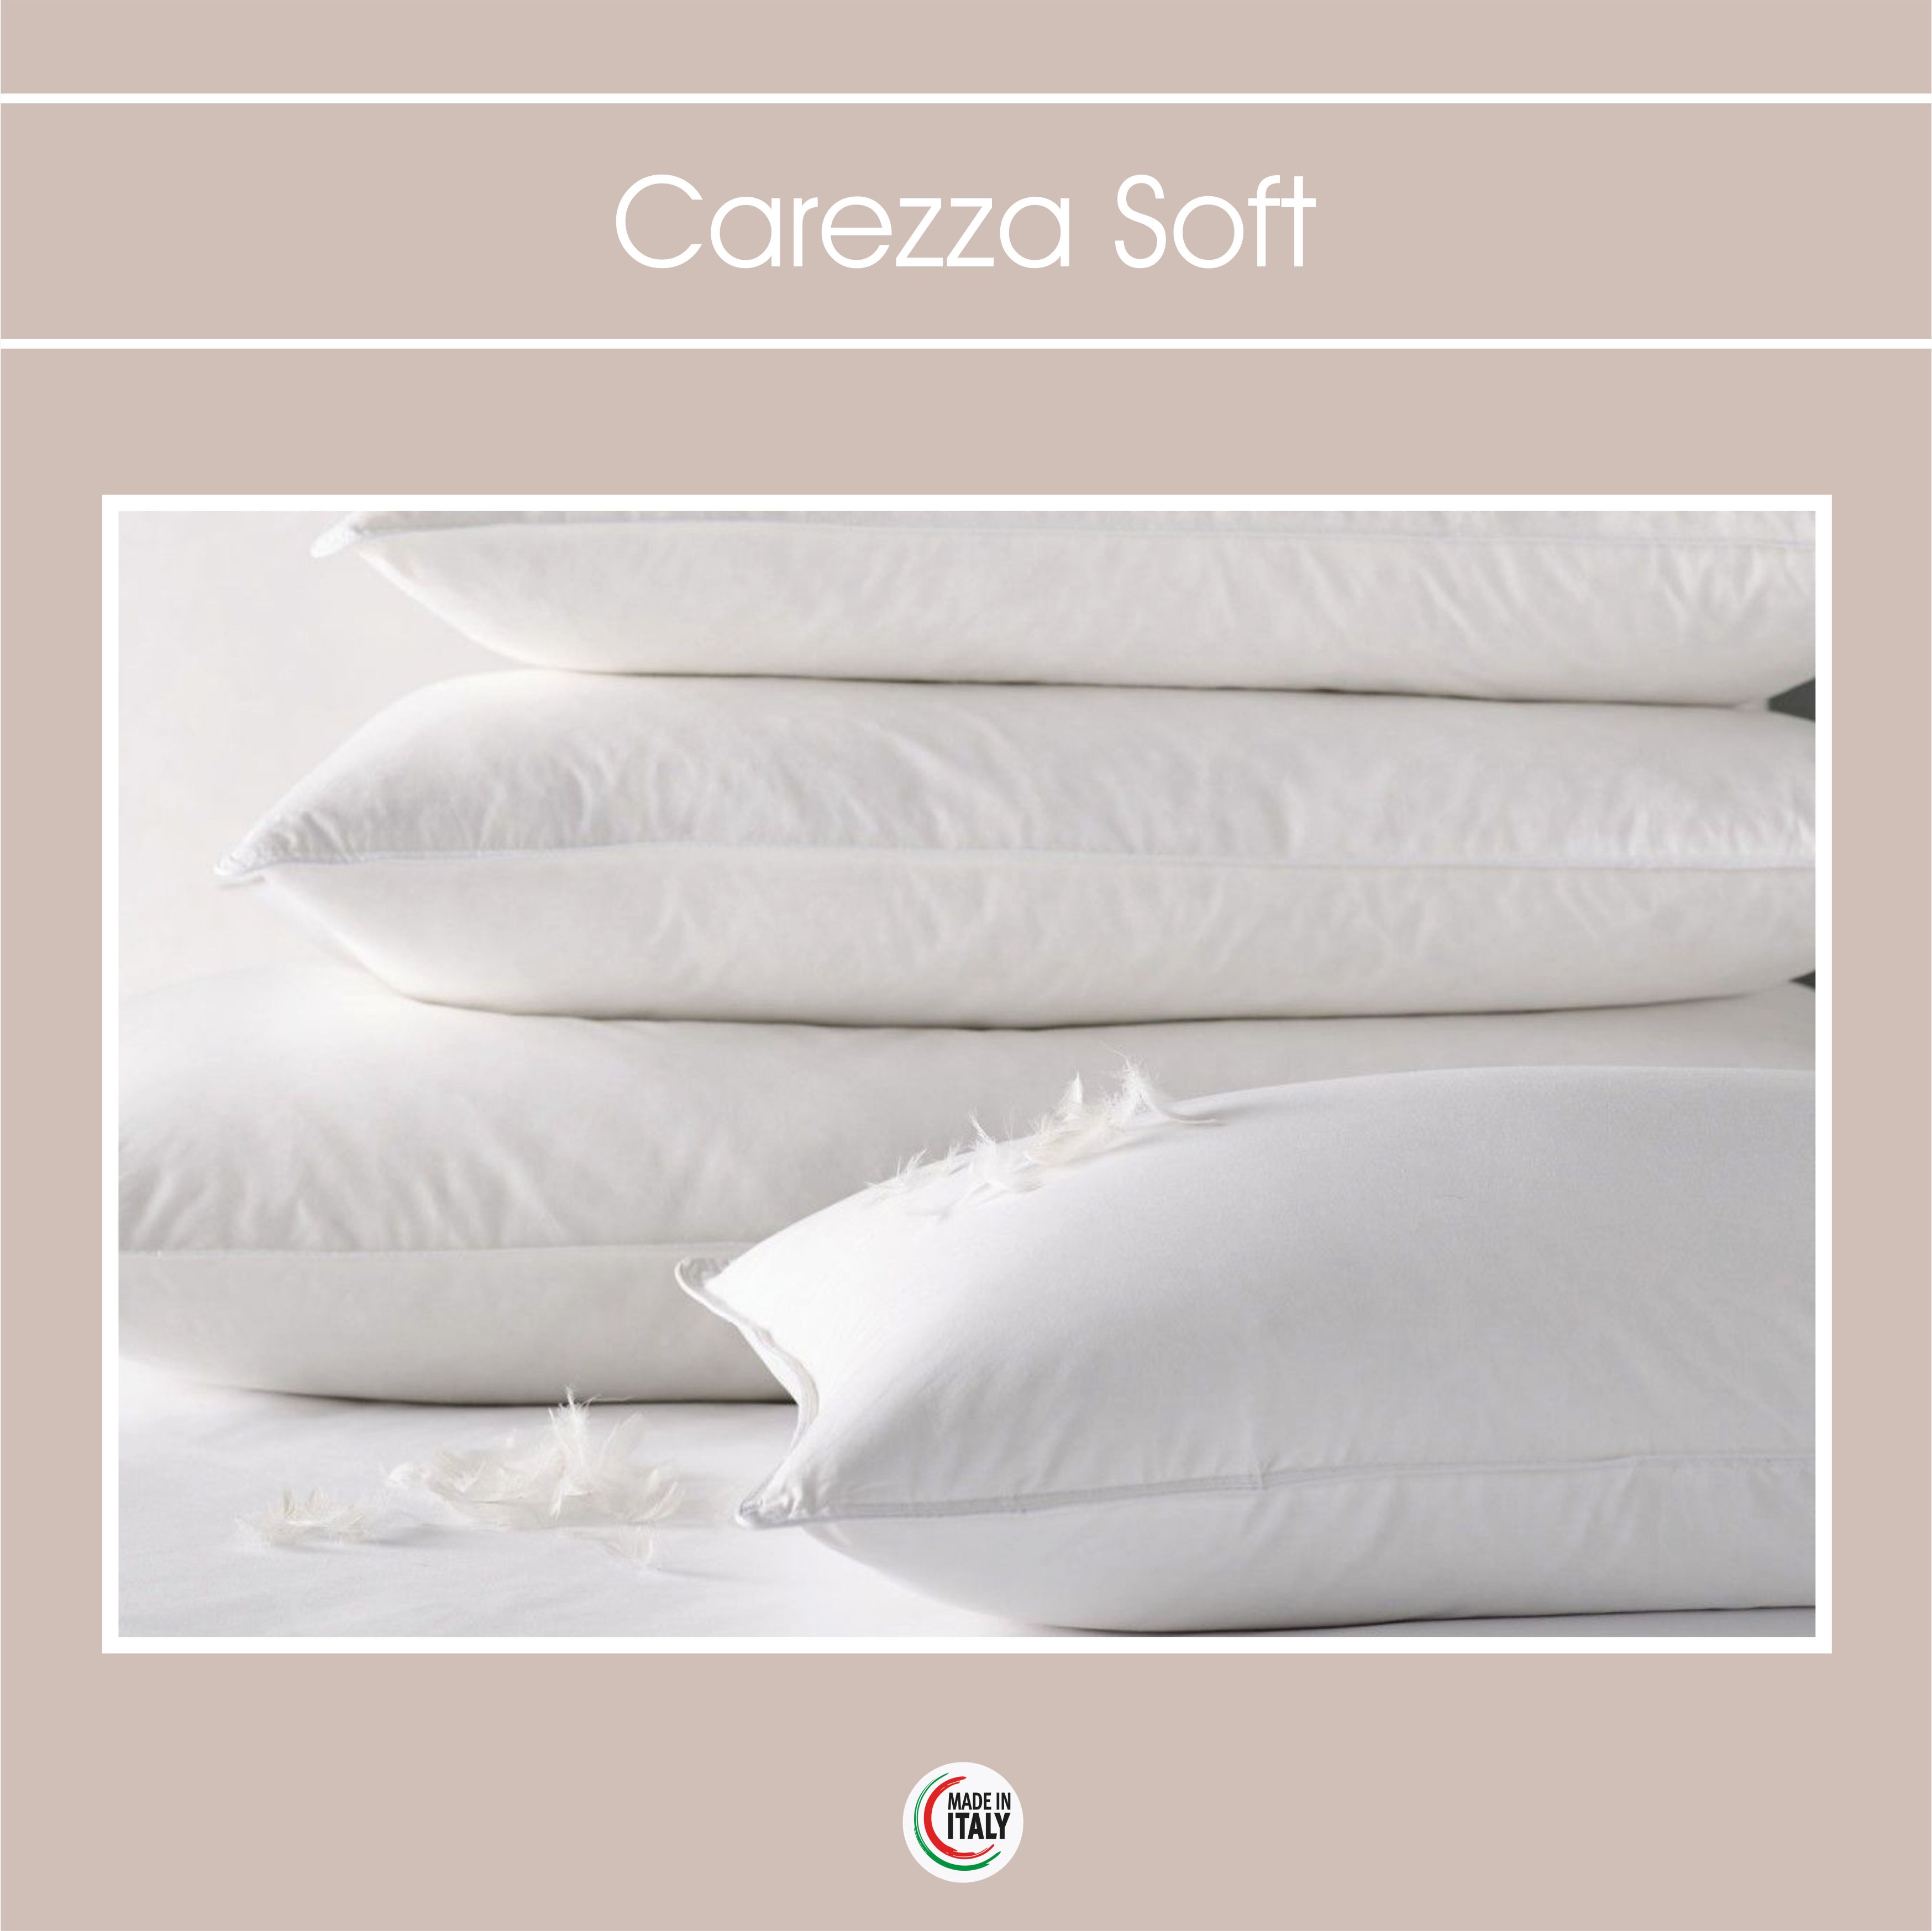 Carezza Soft